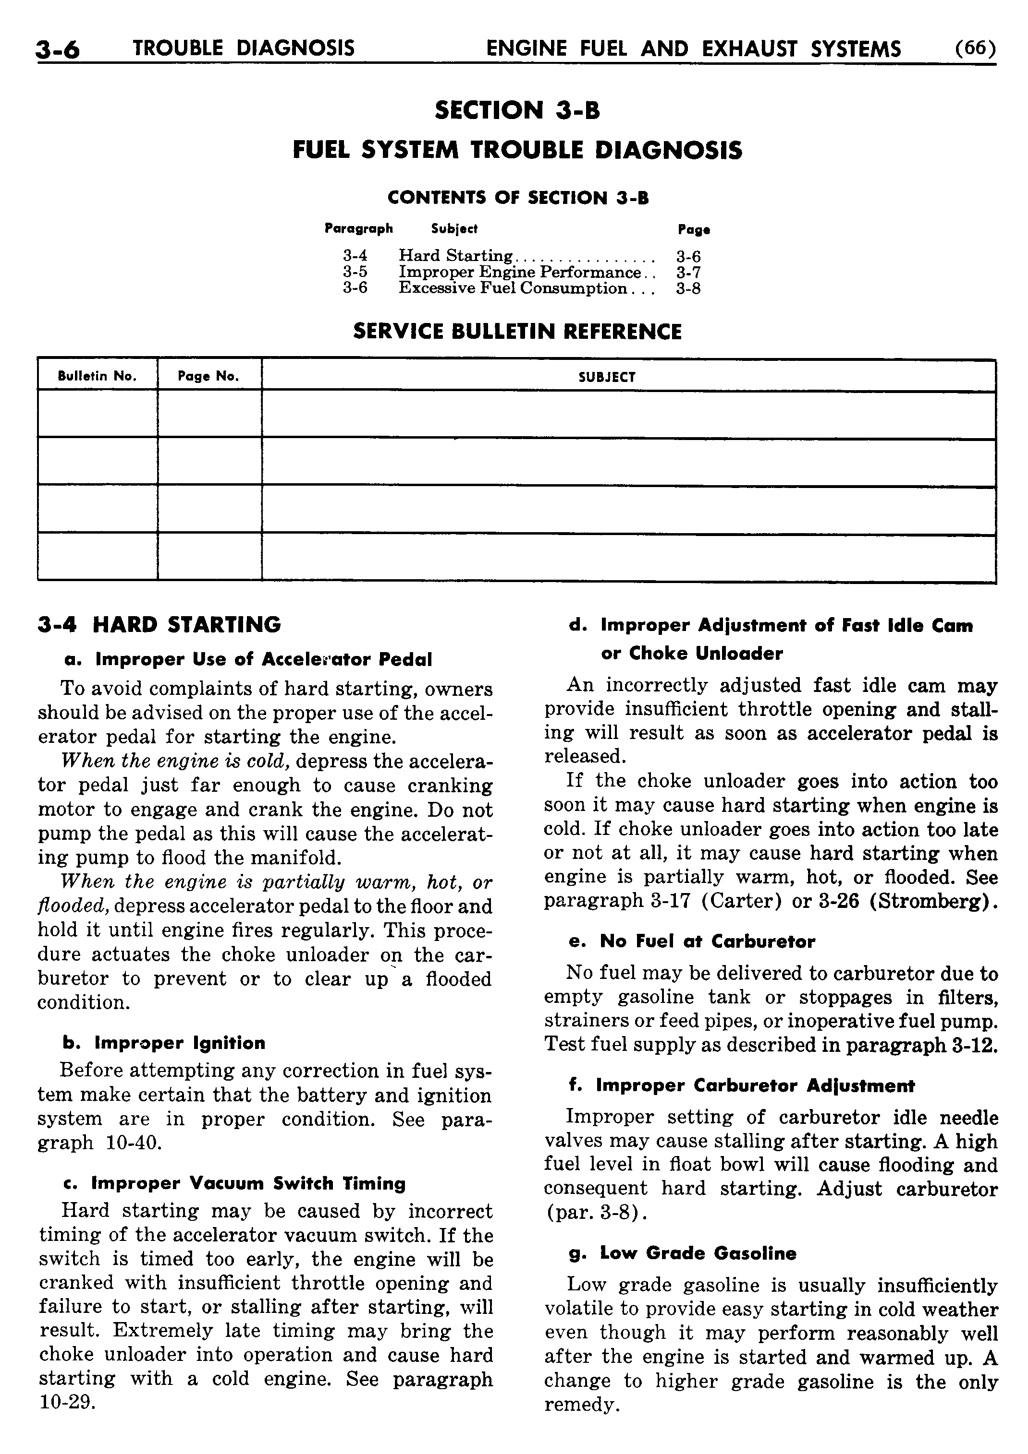 n_04 1955 Buick Shop Manual - Engine Fuel & Exhaust-006-006.jpg